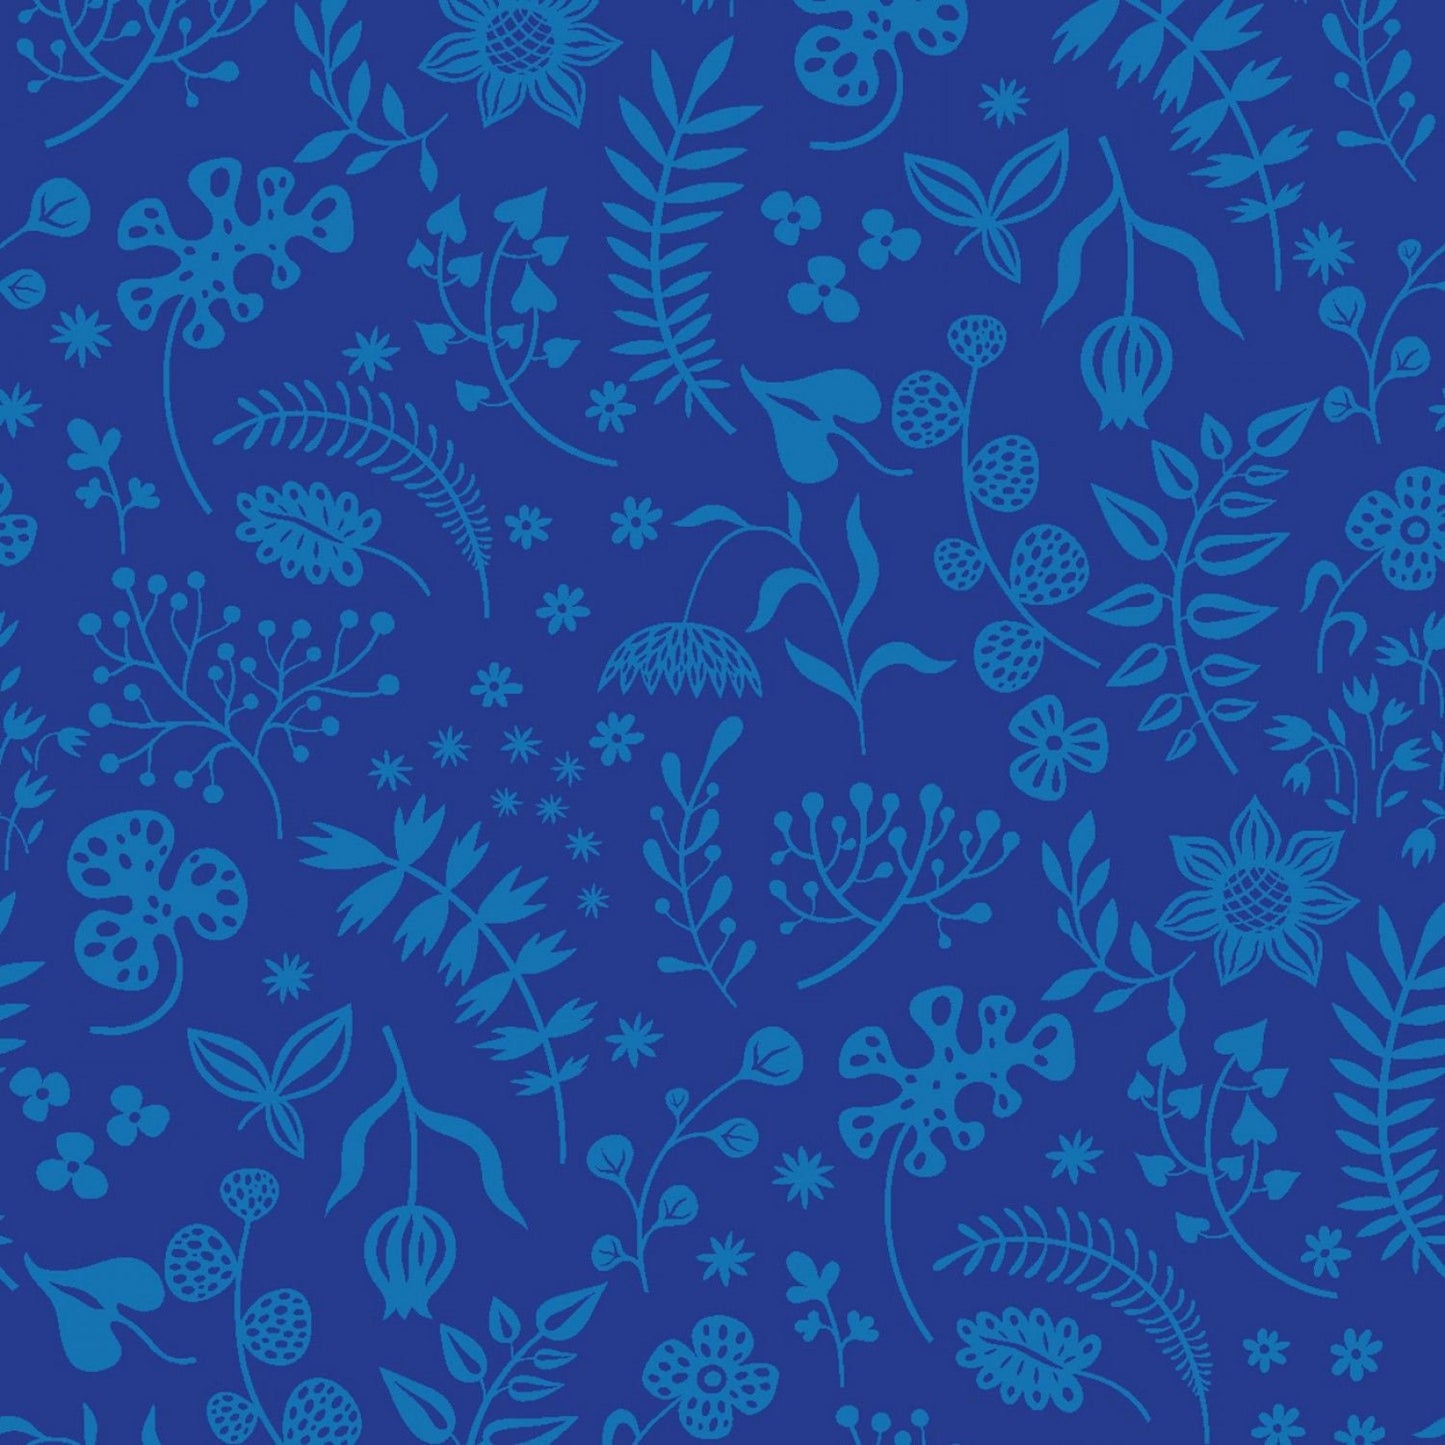 Sleepy Time by Helen Dardik Leaves Royal Blue Y3346-92 Cotton Woven Fabric